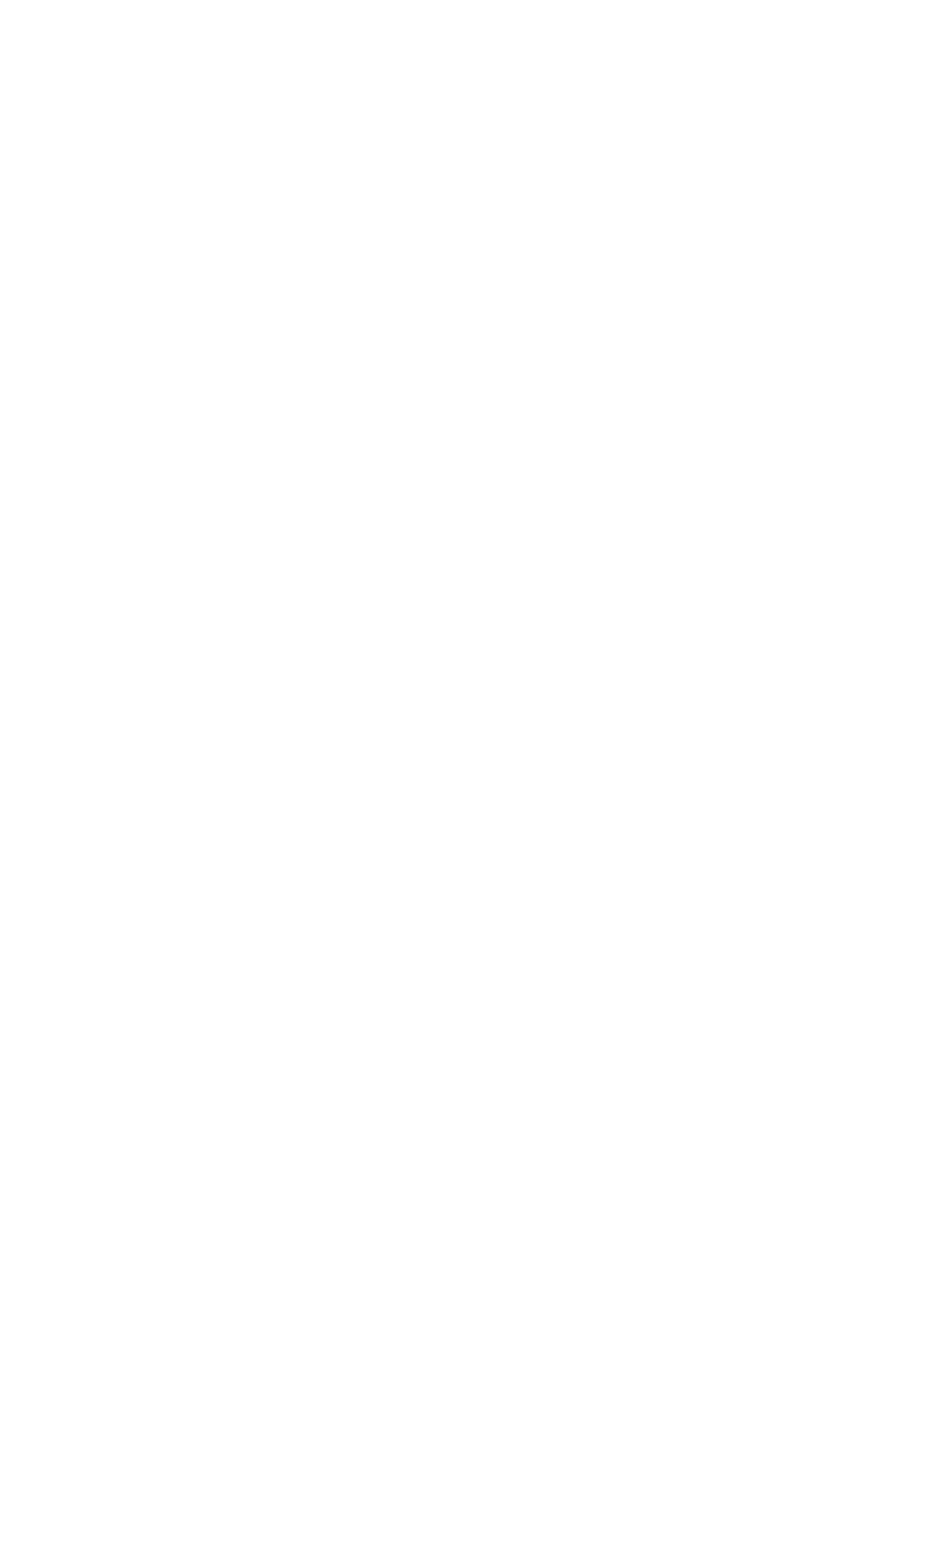 Fertiglobe logo for dark backgrounds (transparent PNG)